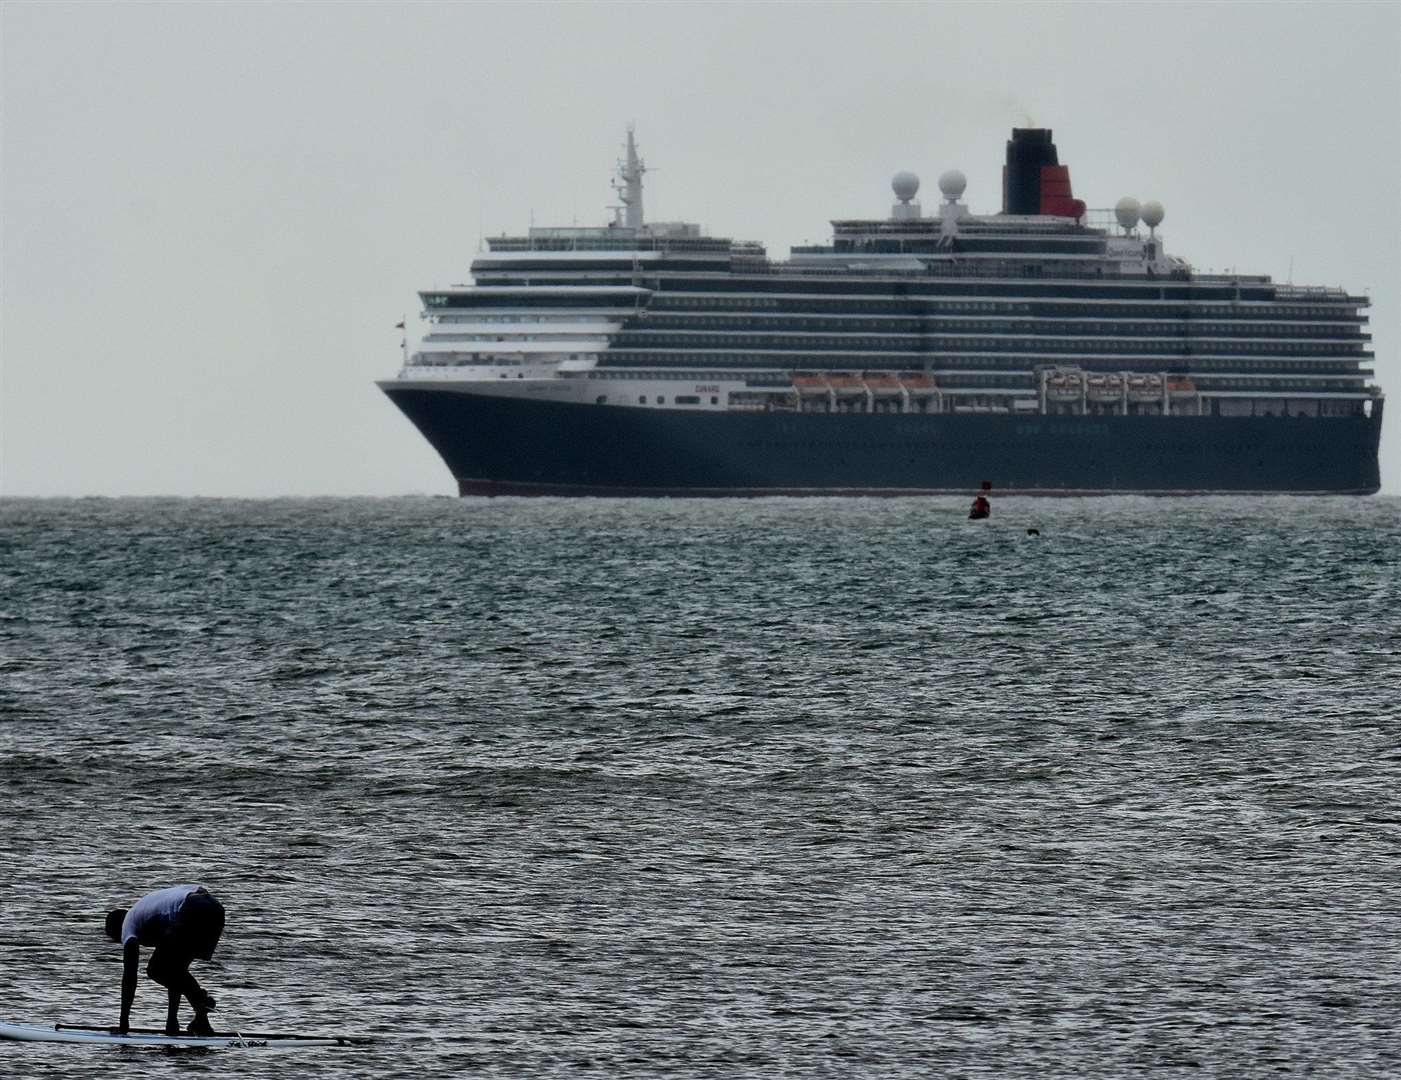 The Queen Victoria has now left Kent. Pic: @jason_photos